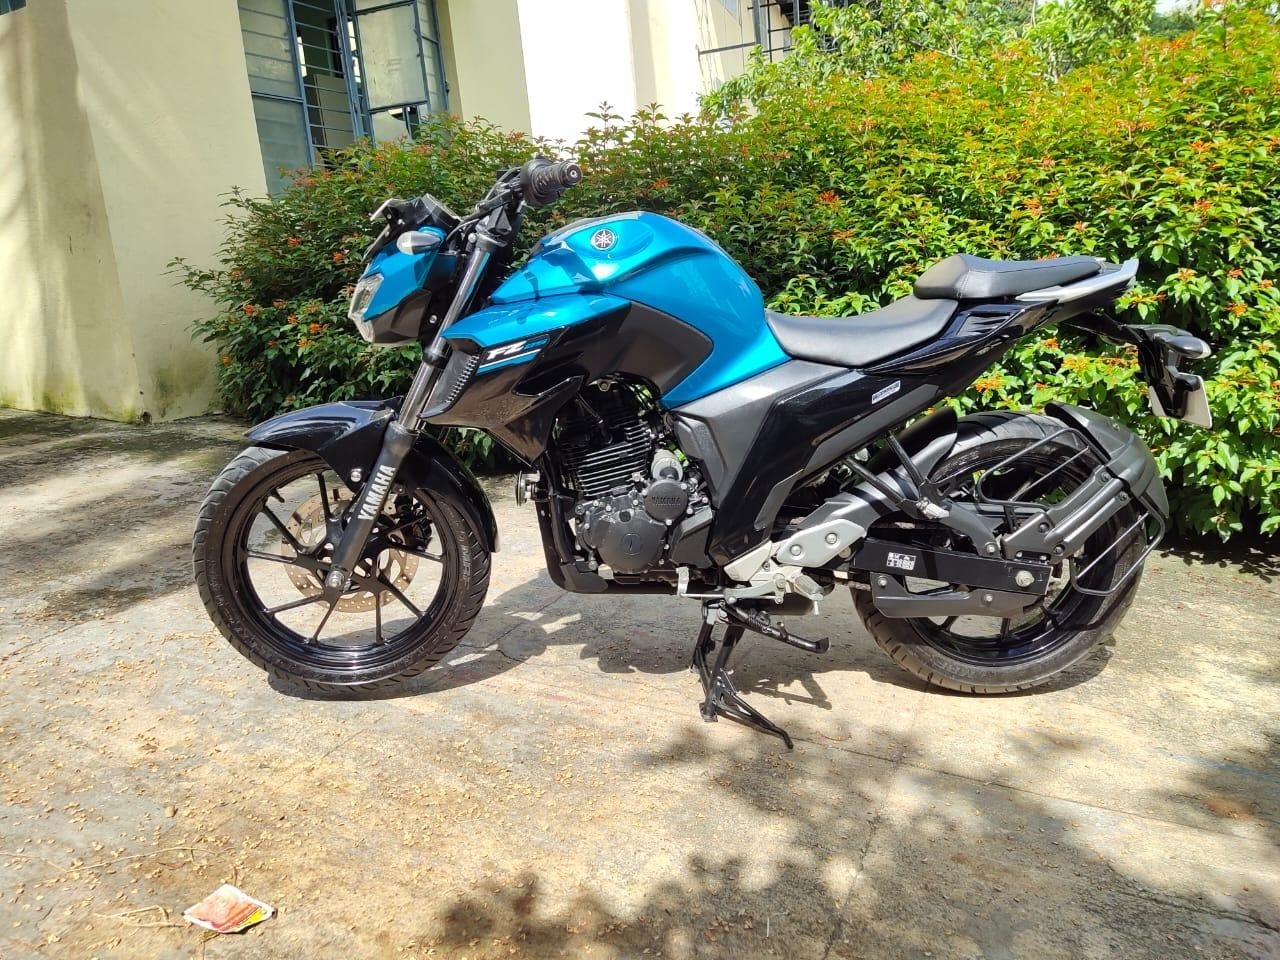 Yamaha FZ25 Review (Knight Black) - Perfect Powerful 250cc 